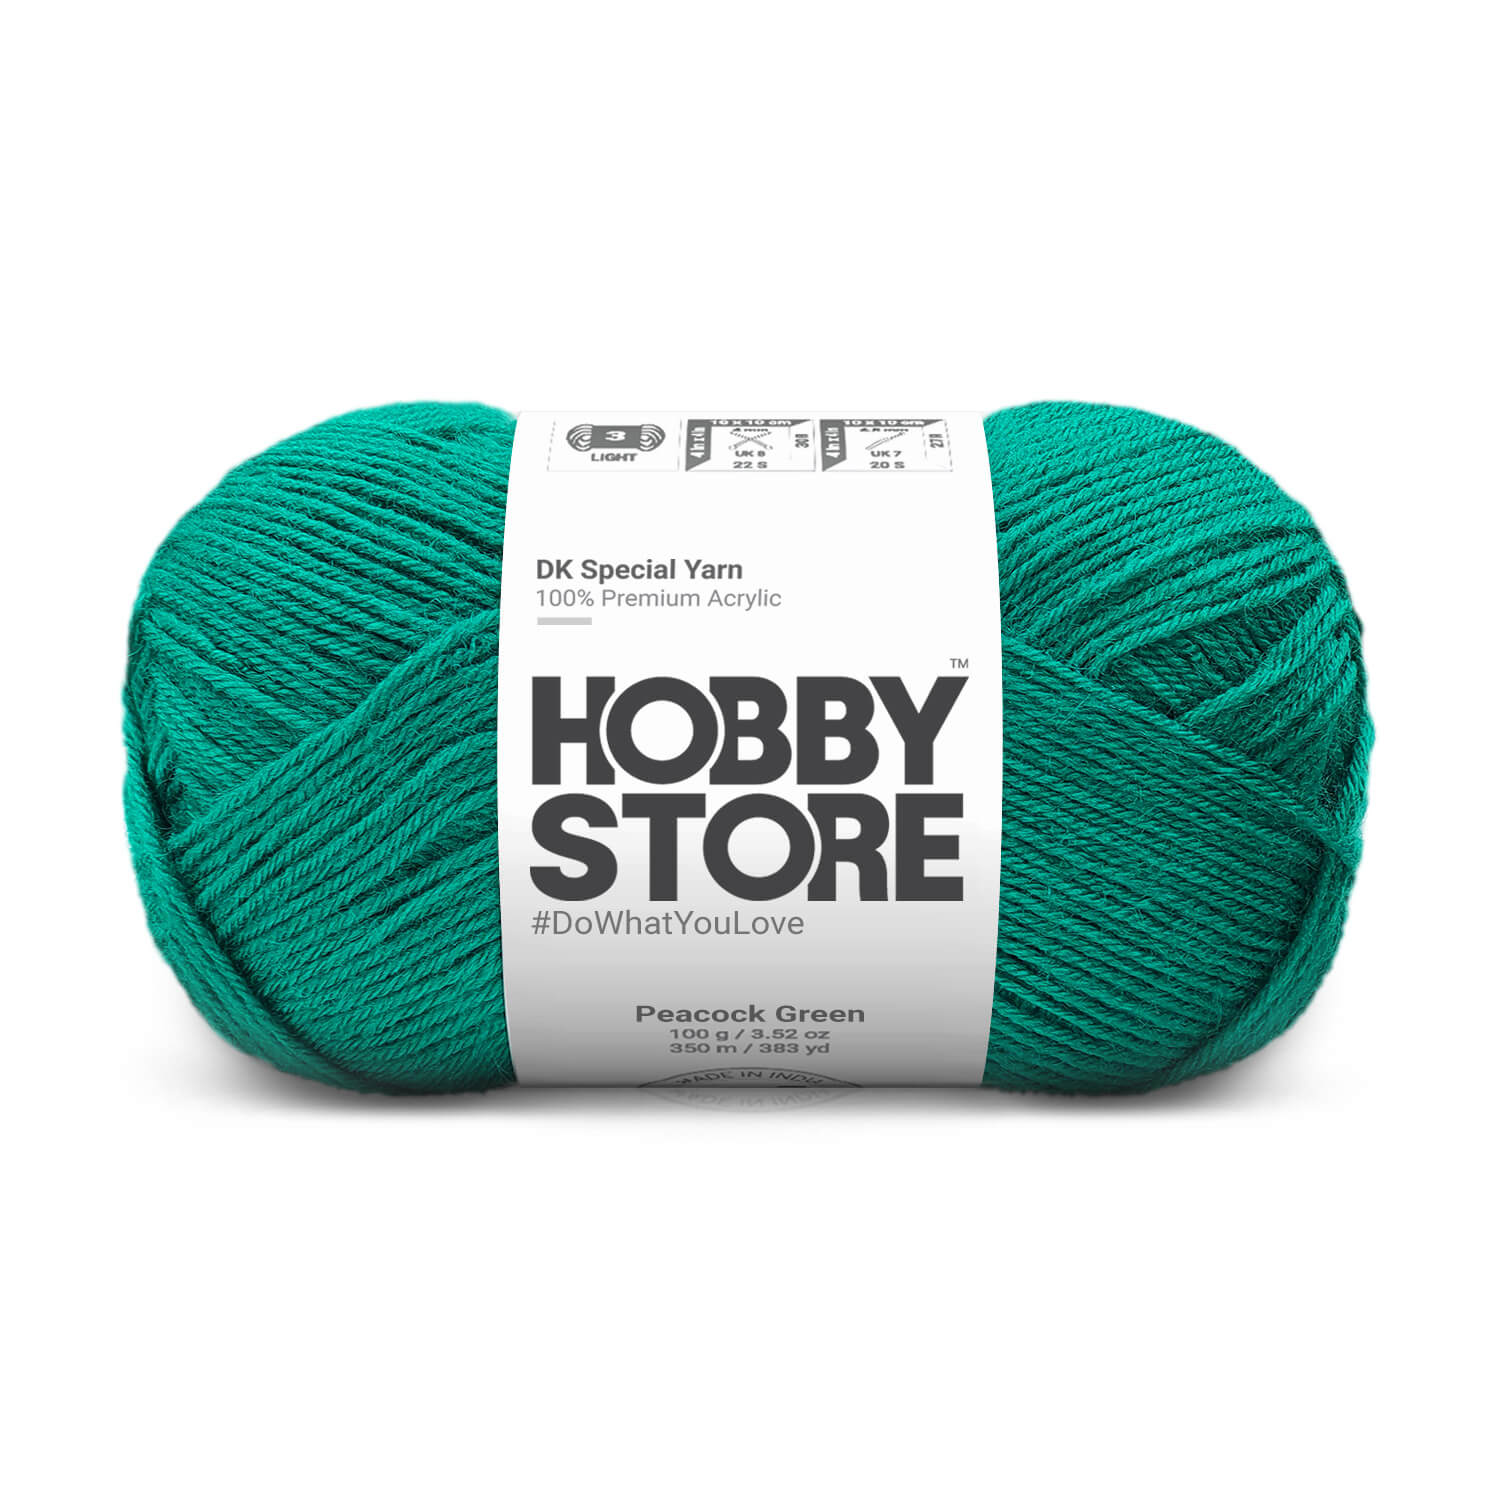 Hobby Store DK Special Yarn - Peacock Green 5014